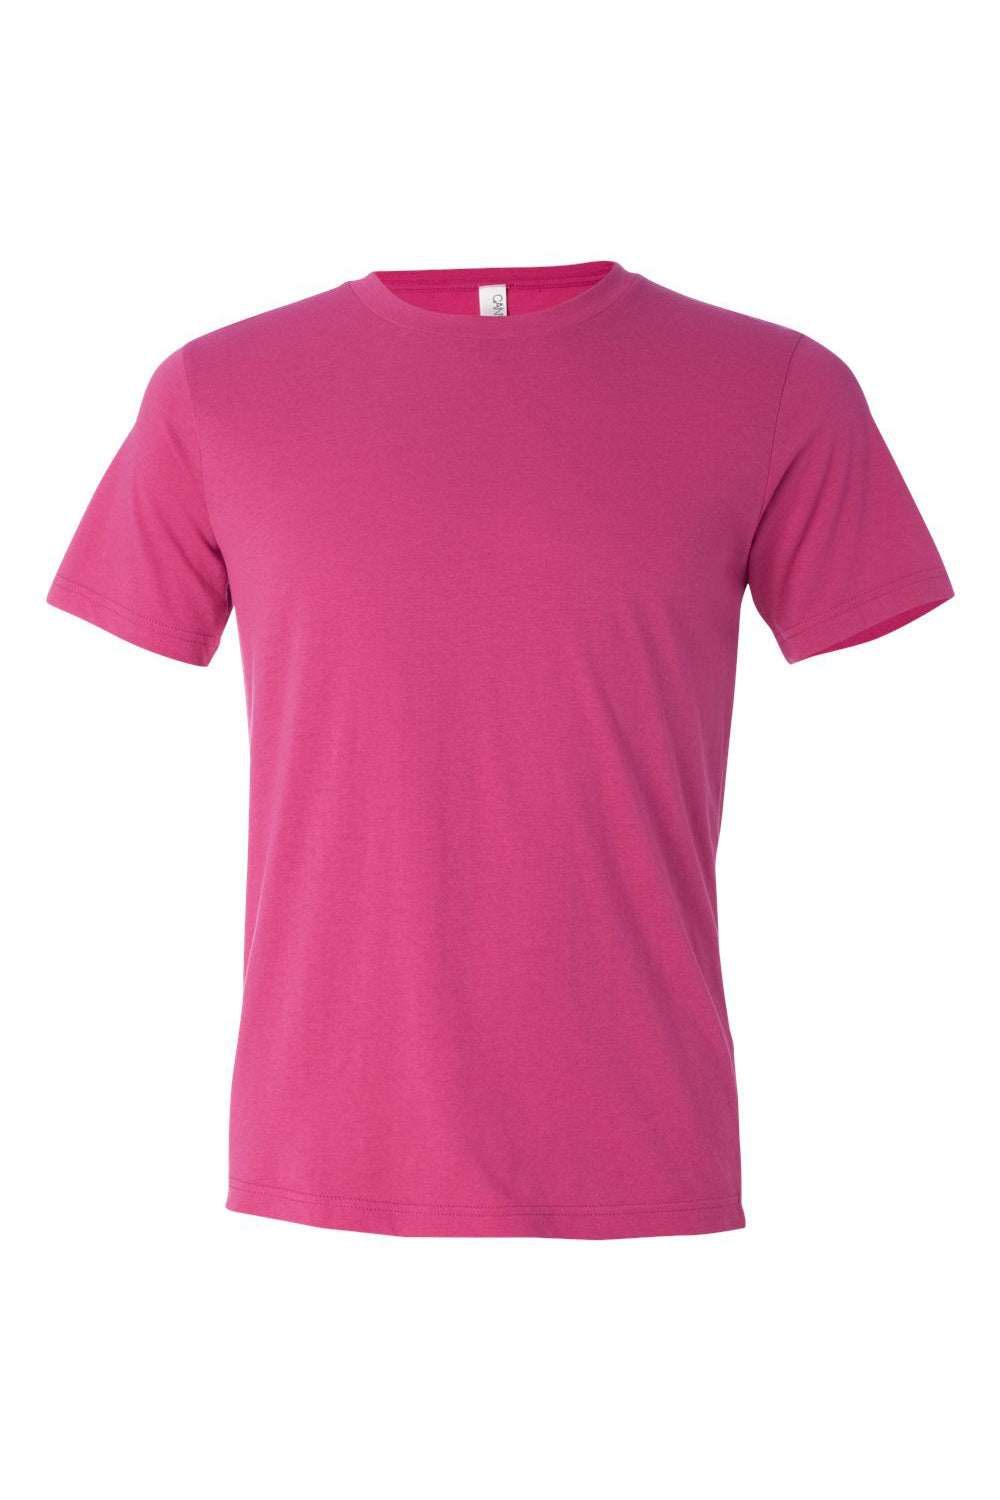 Bella + Canvas BC3650/3650 Mens Short Sleeve Crewneck T-Shirt Berry Pink Flat Front